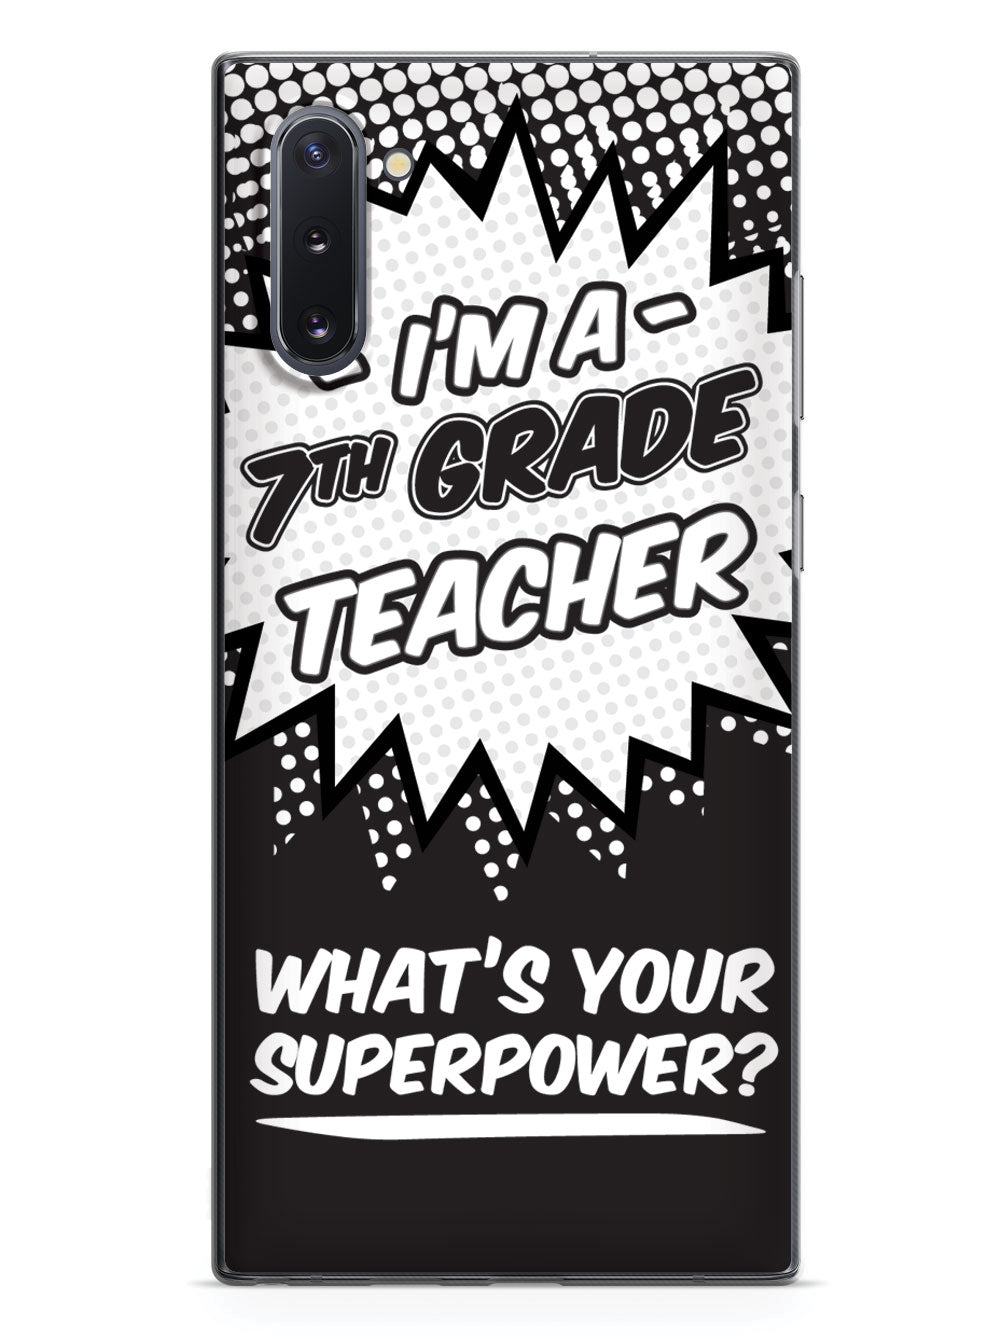 7th Grade Teacher - What's Your Superpower? Case